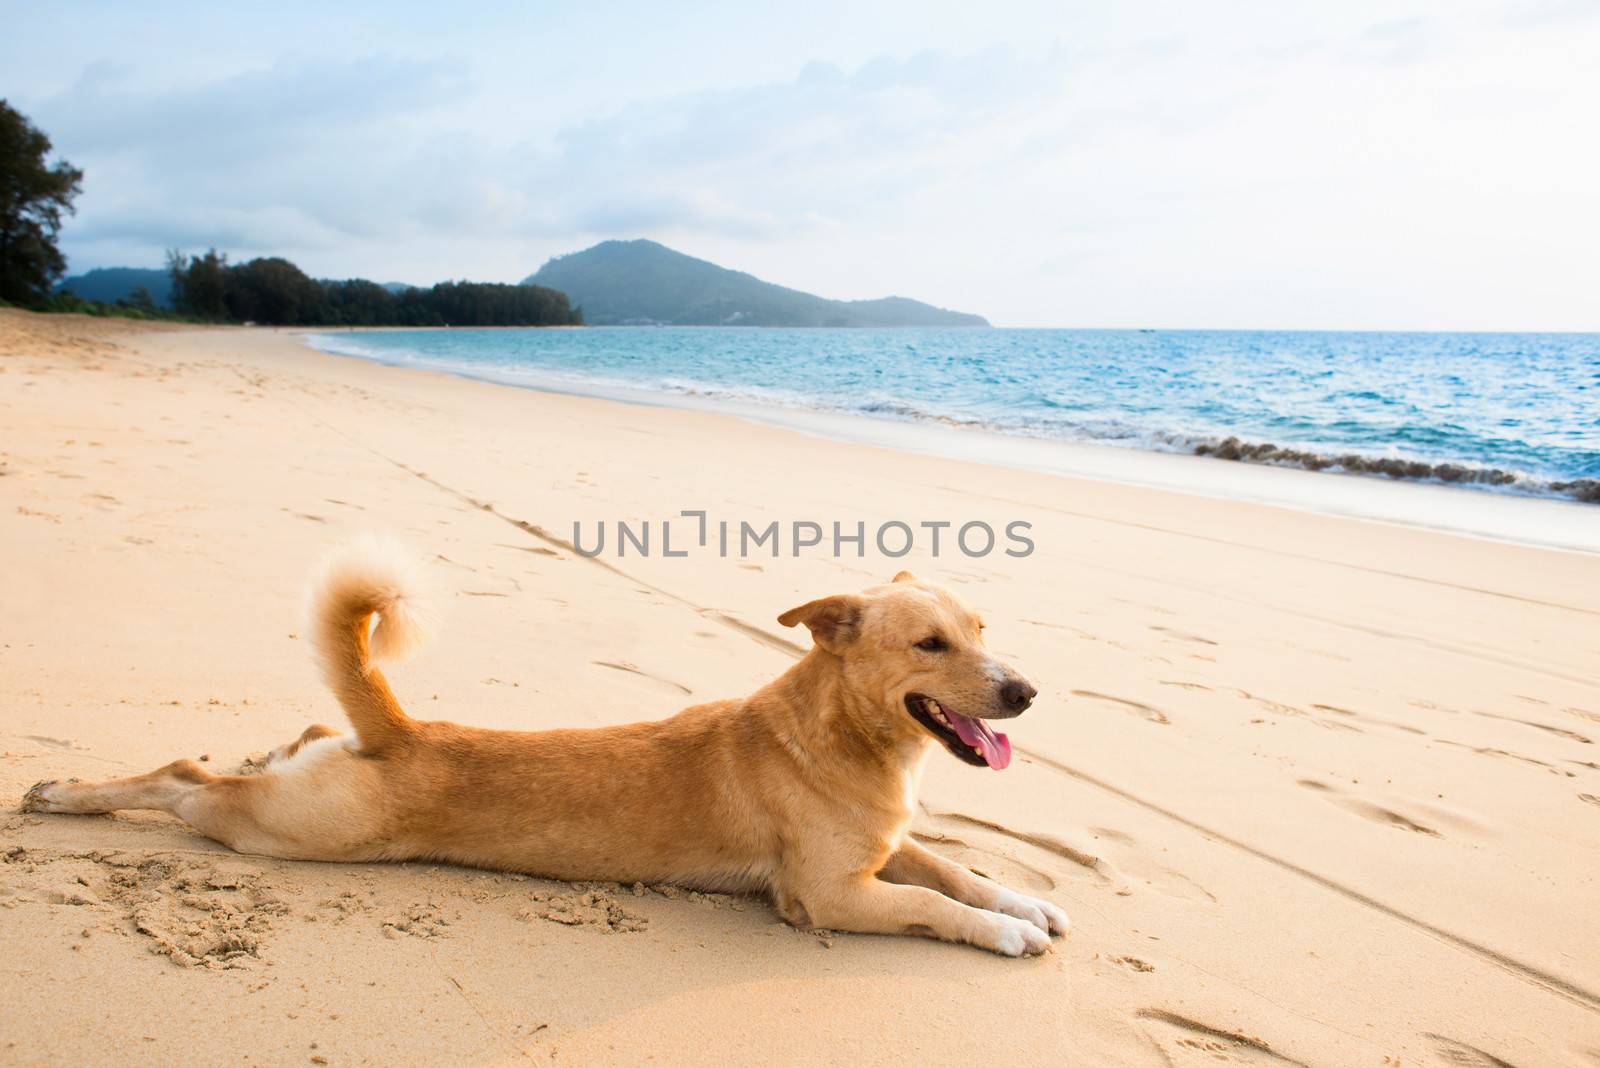 Relaxed dog on tropical beach by iryna_rasko